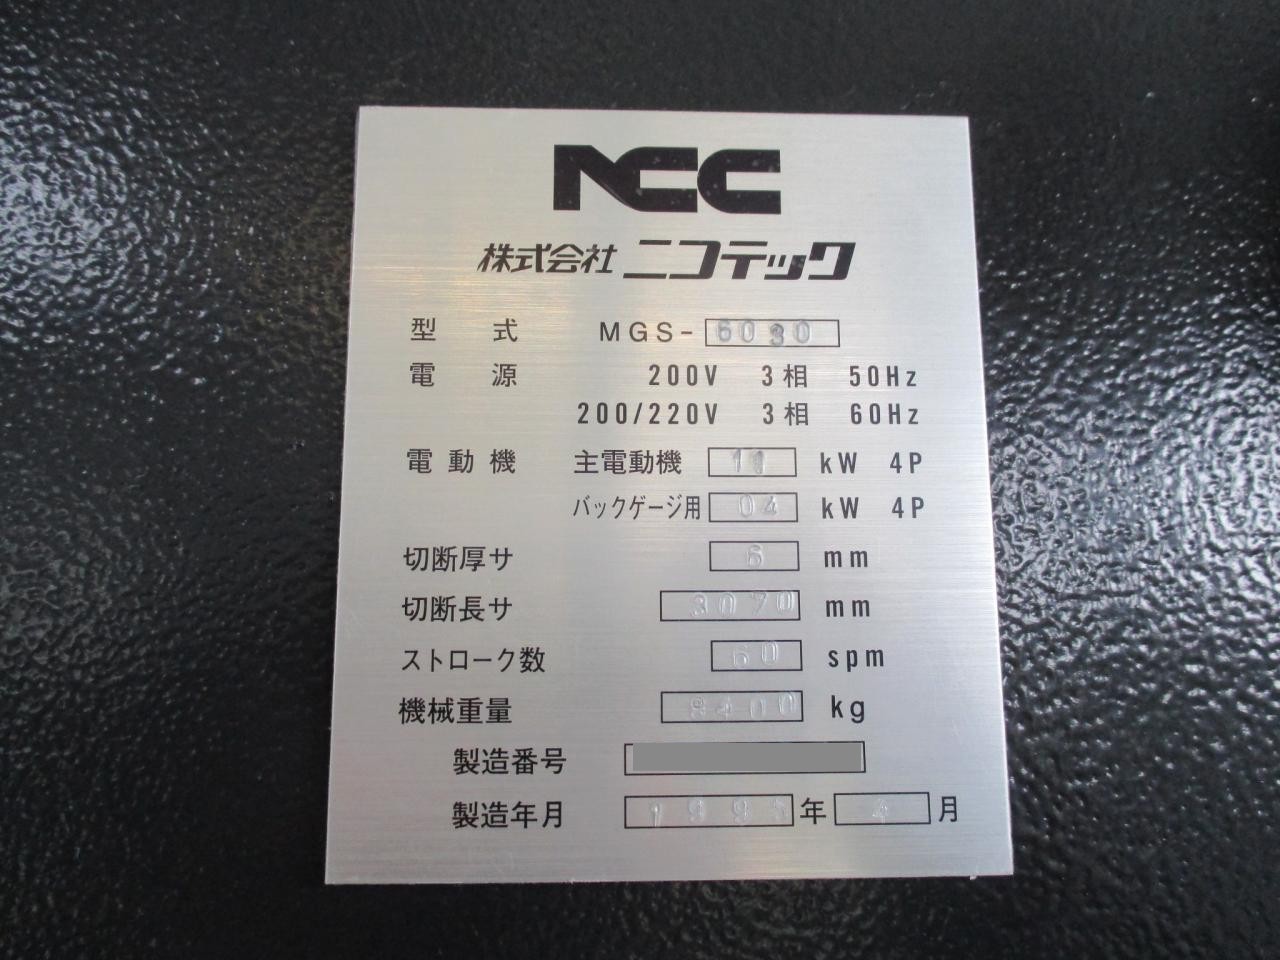 MGS-6030銘板